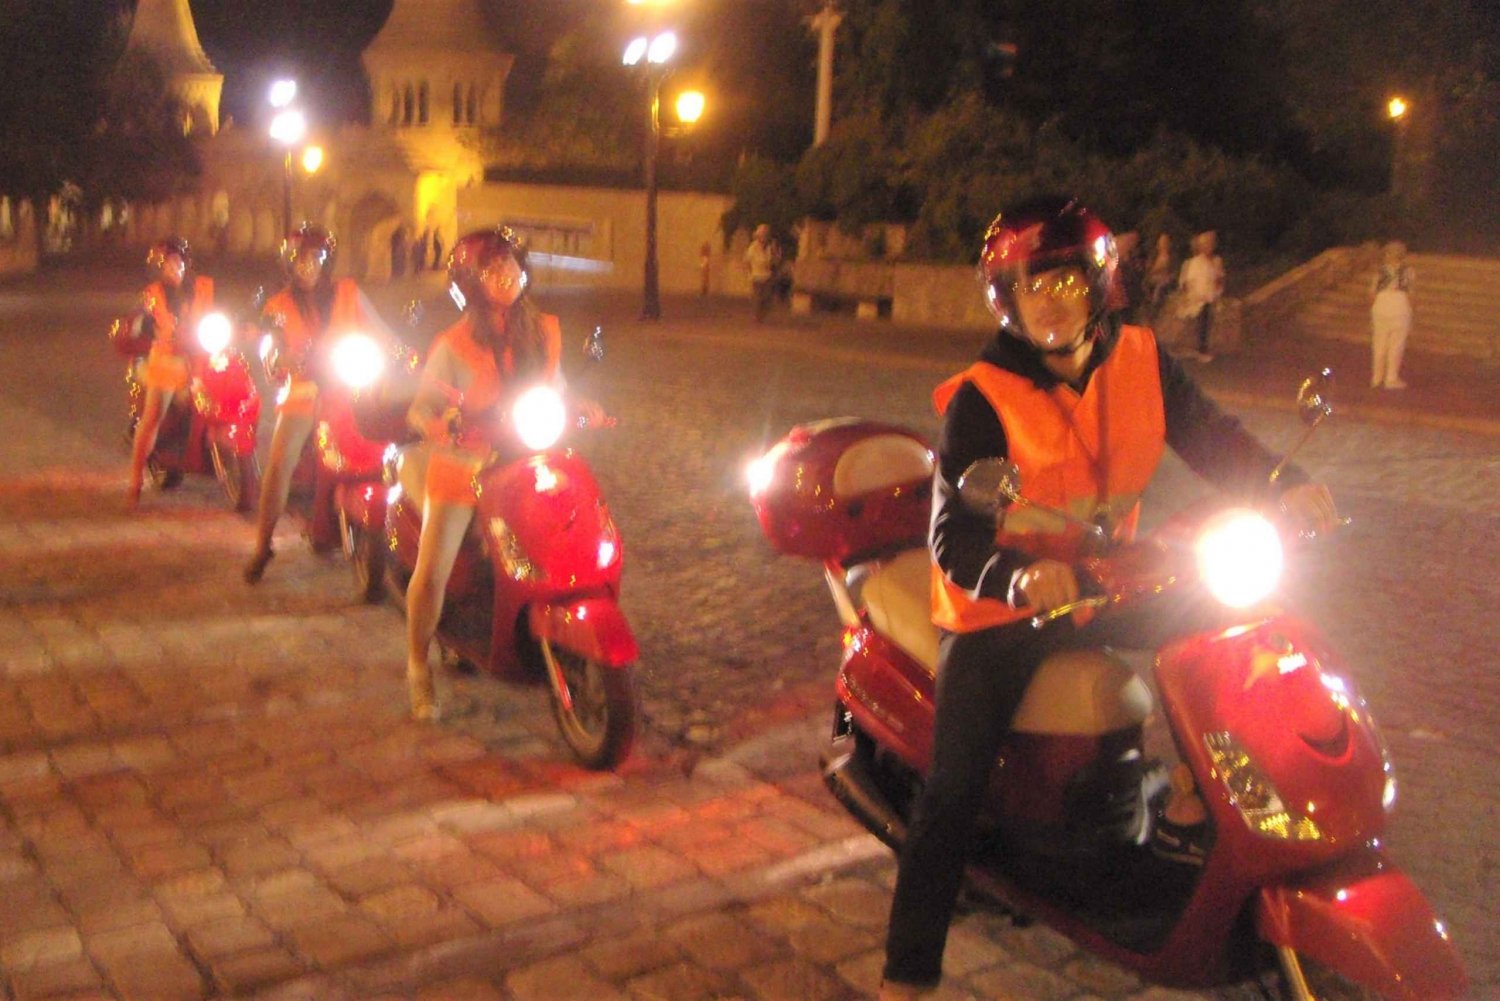 Budapest City Lights Scooter Tour